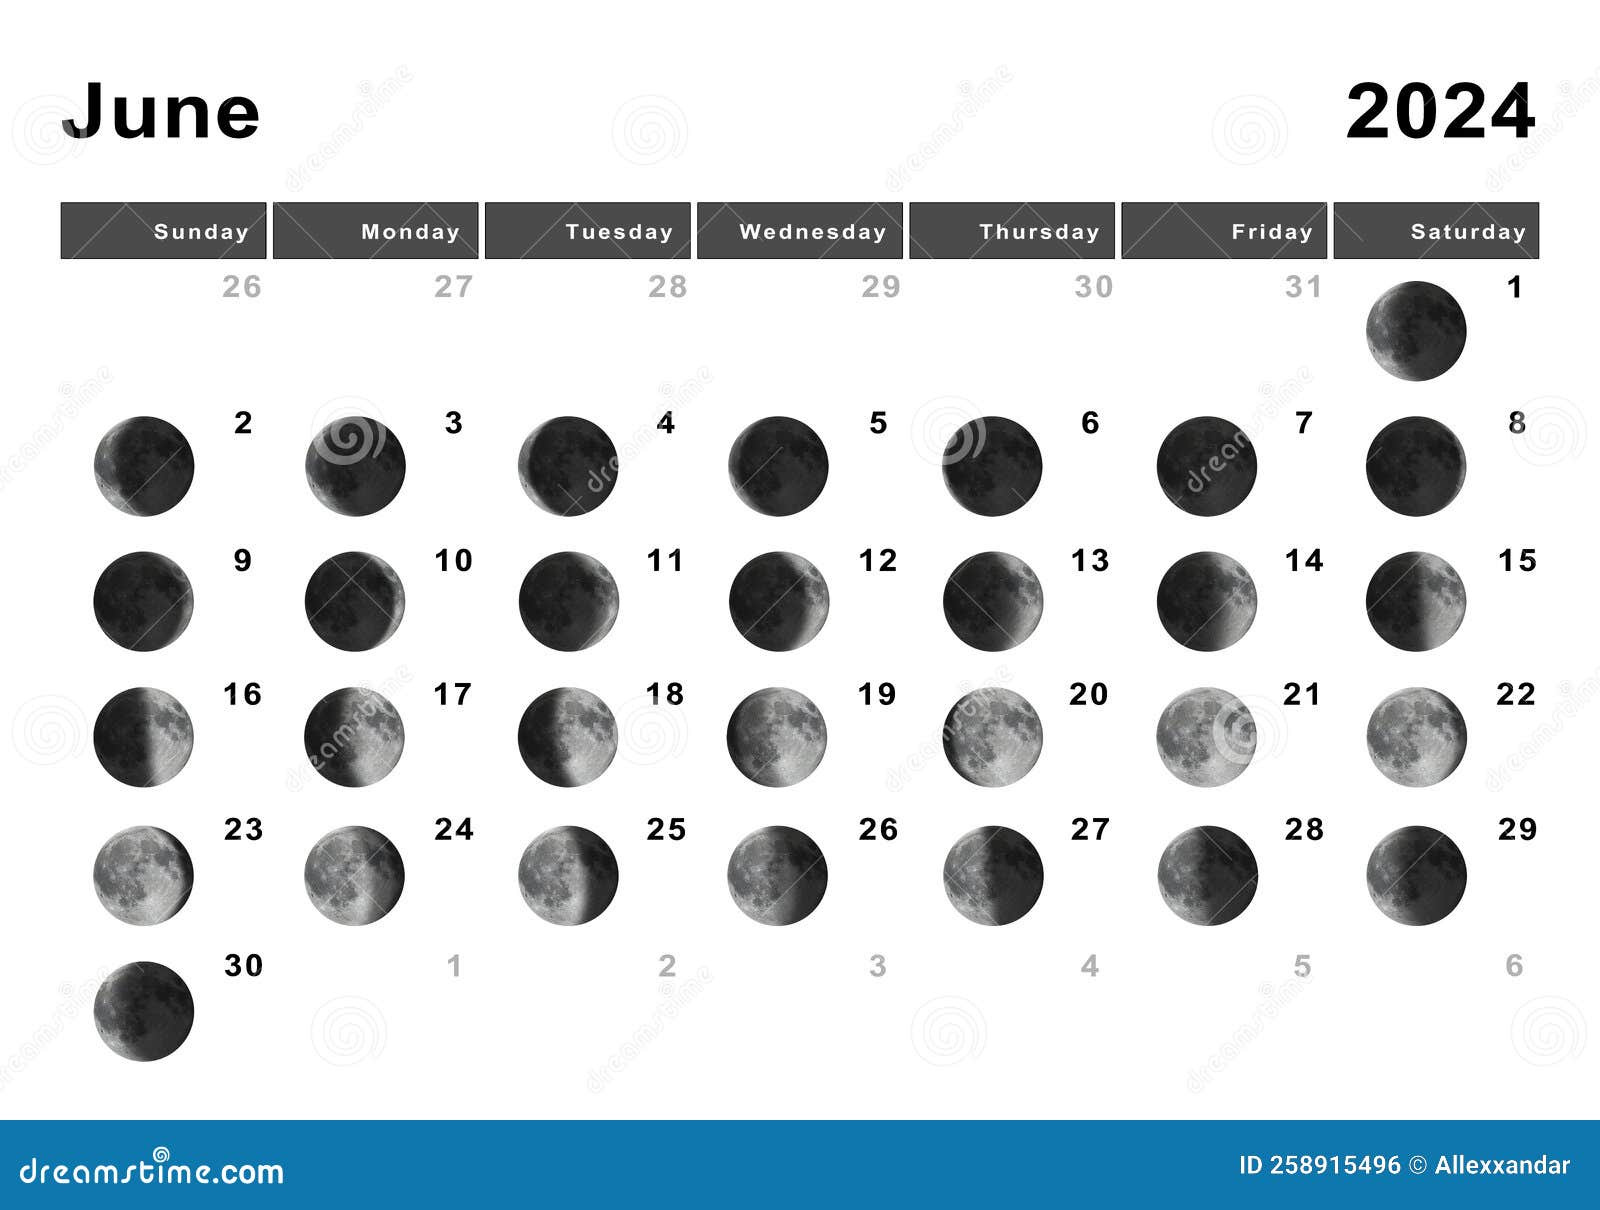 June 2024 Lunar Calendar, Moon Cycles Stock Illustration inside Moon Phase Calendar June 2024